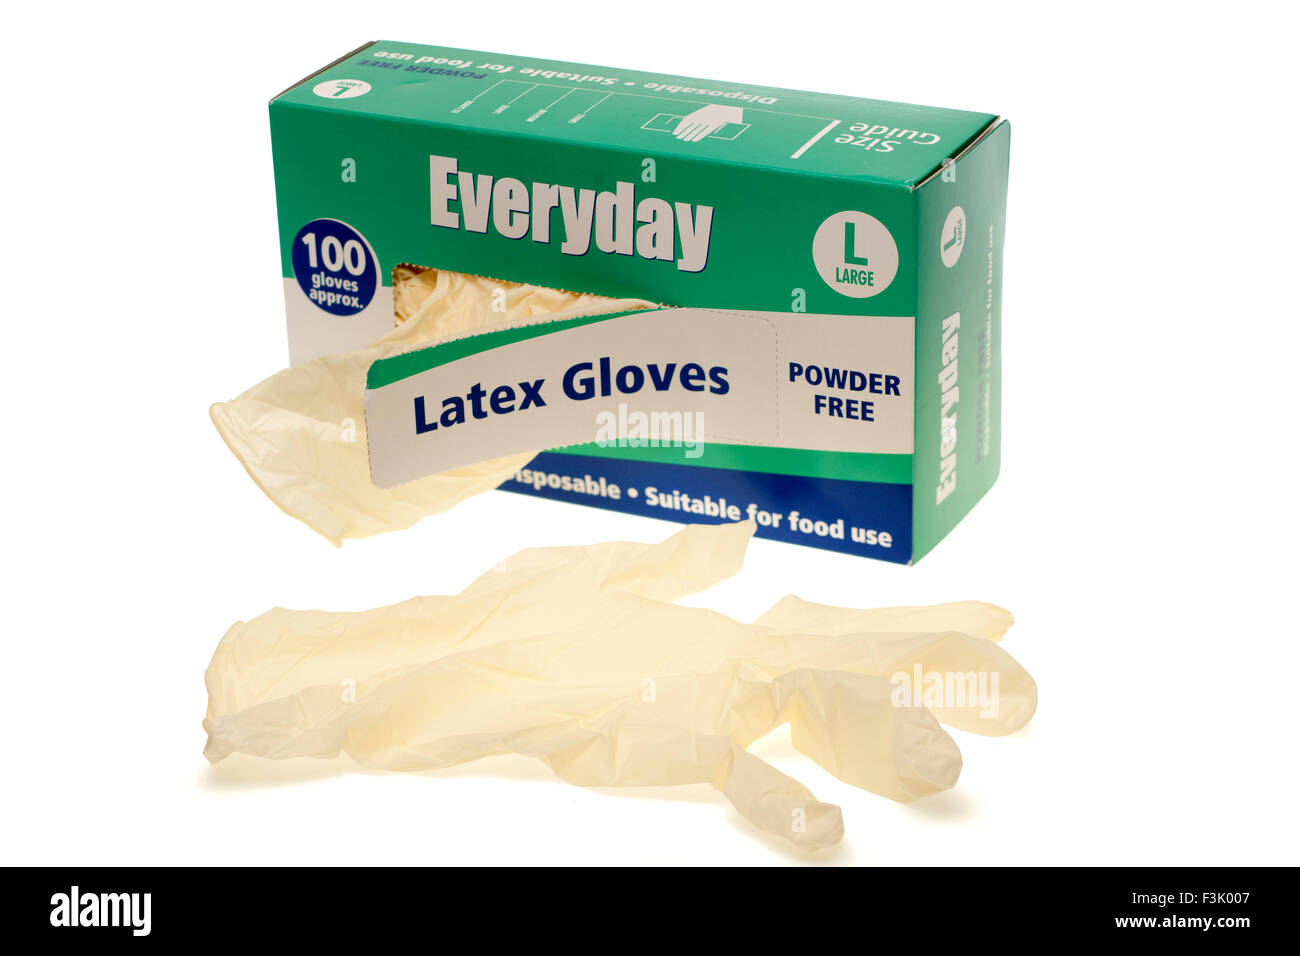 Box of 100 Everdayday powder free disposable large latex gloves Stock Photo